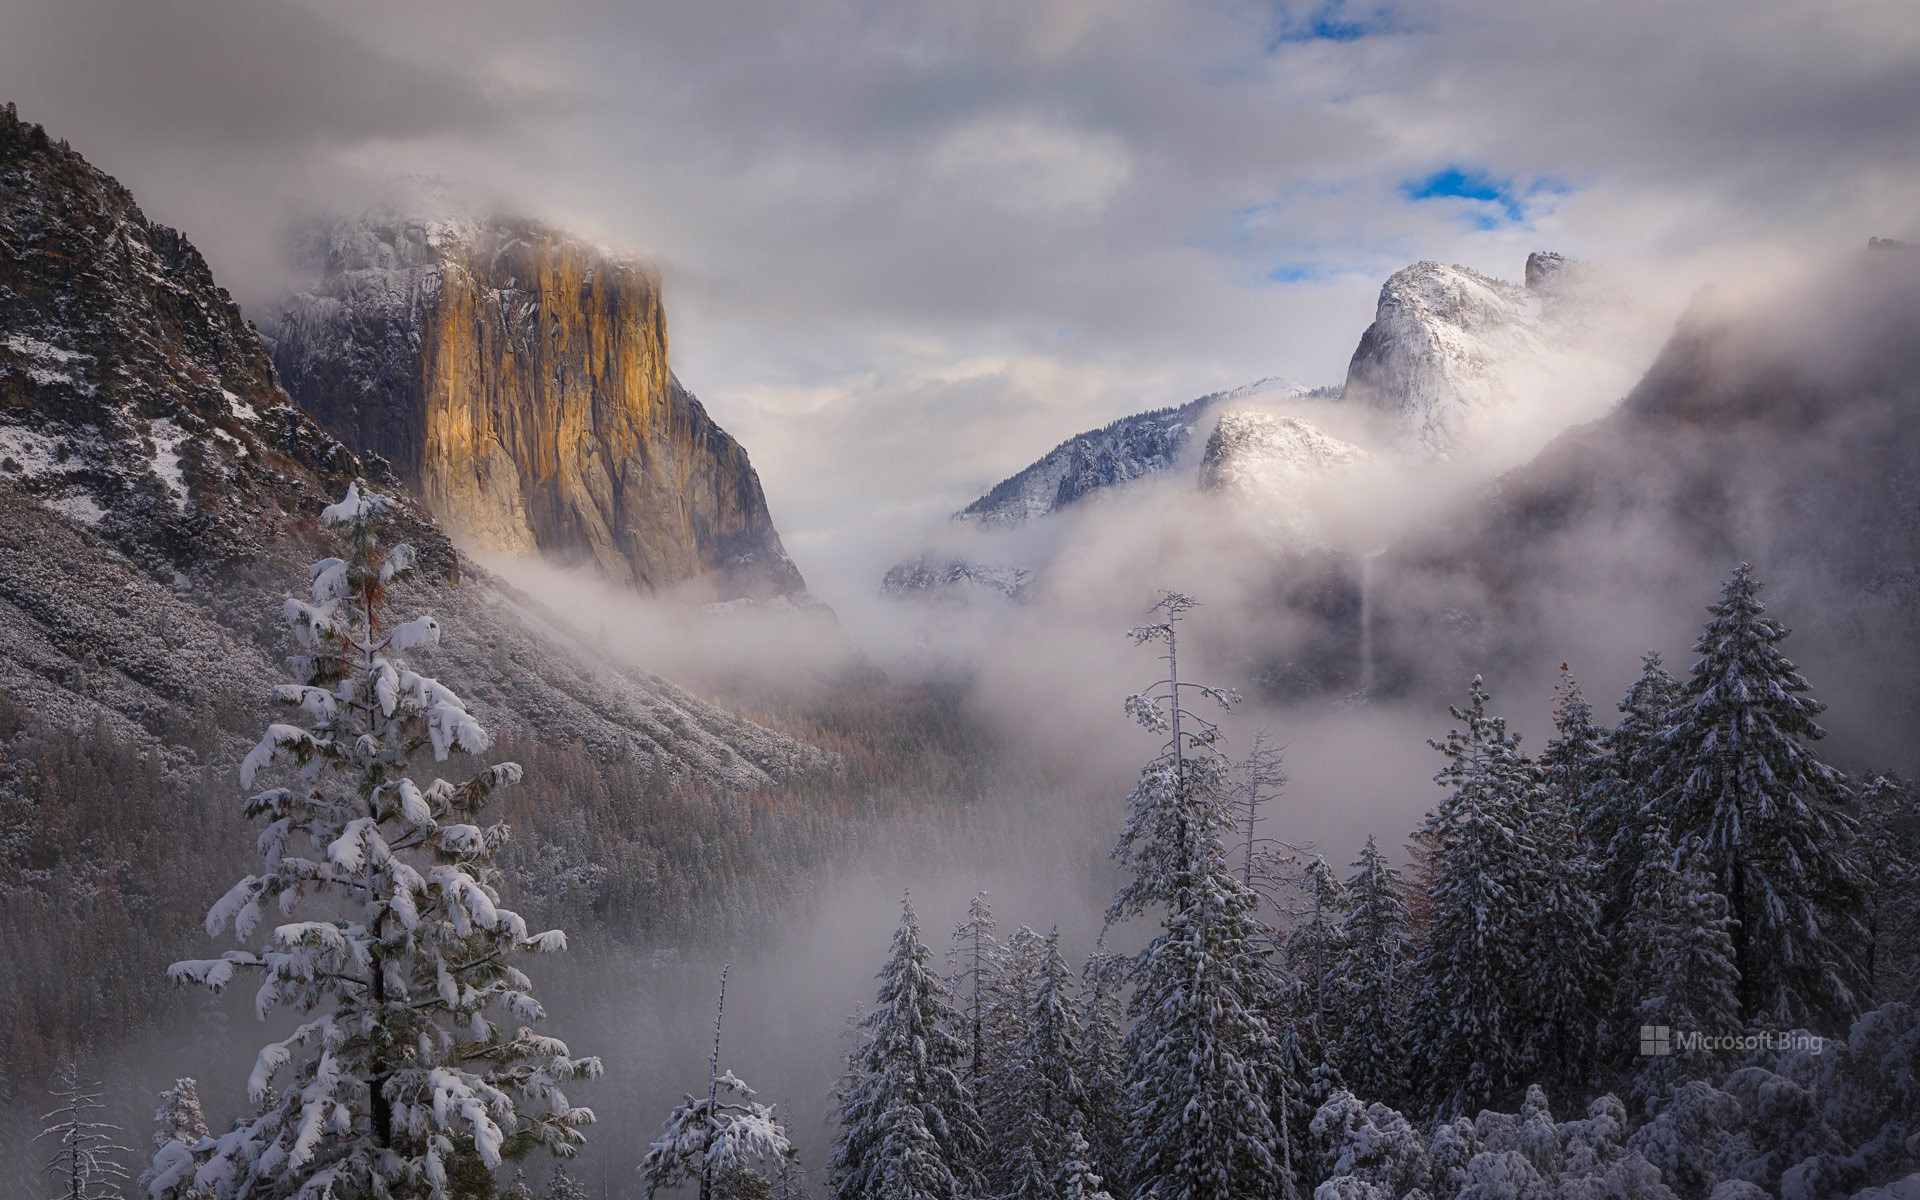 Clearing snowstorm, Yosemite National Park, California